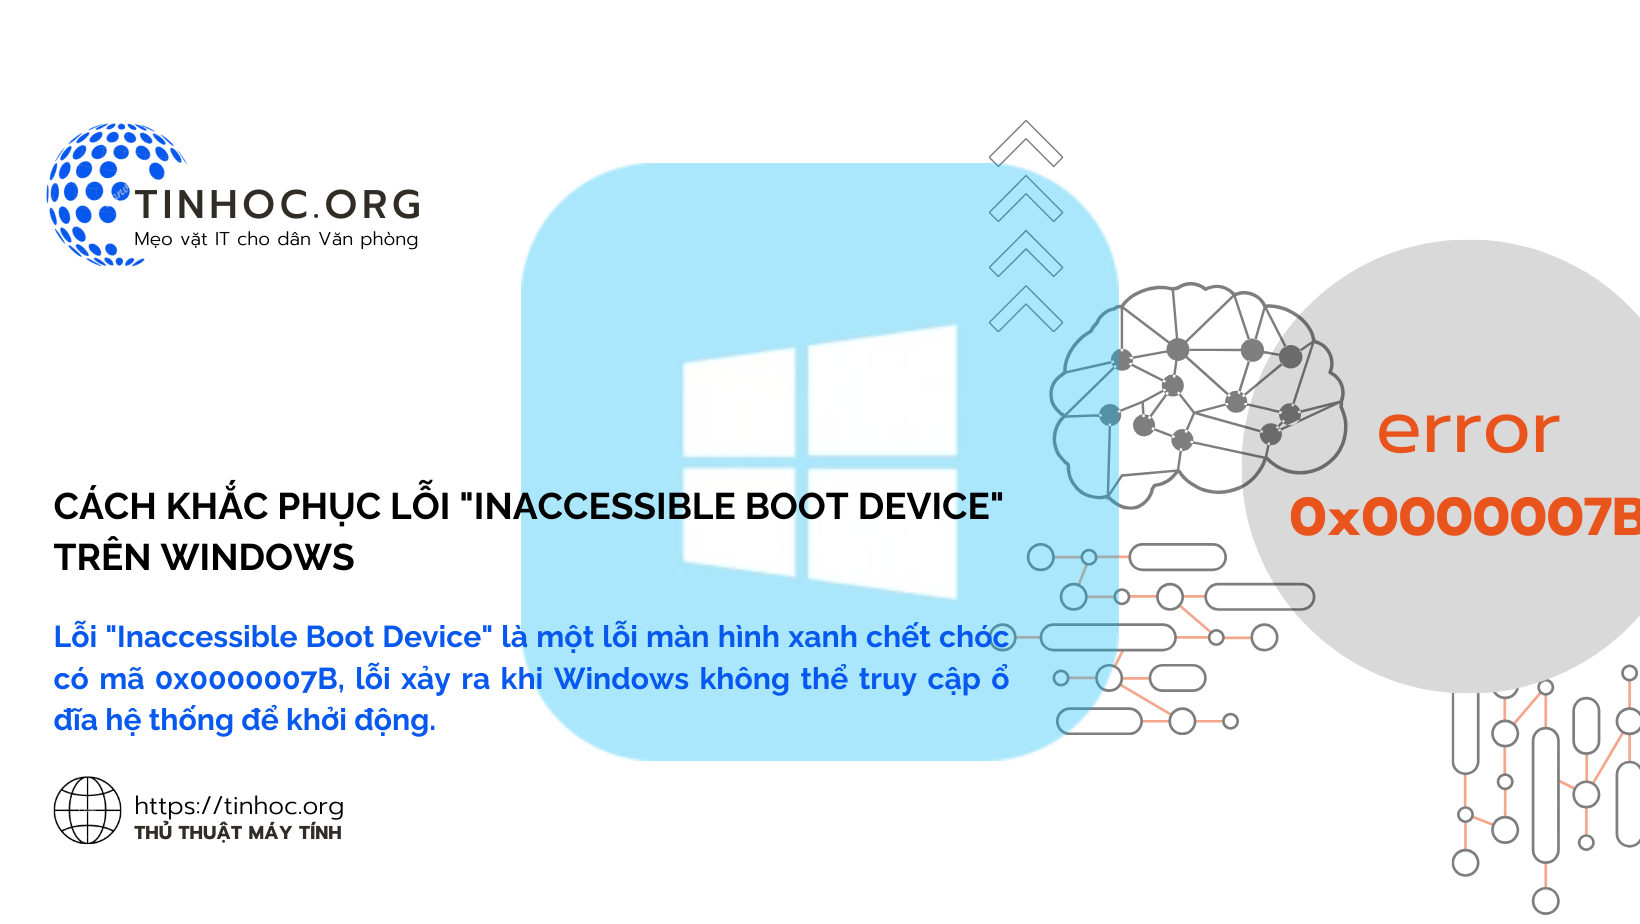 Cách khắc phục lỗi "Inaccessible Boot Device" trên Windows